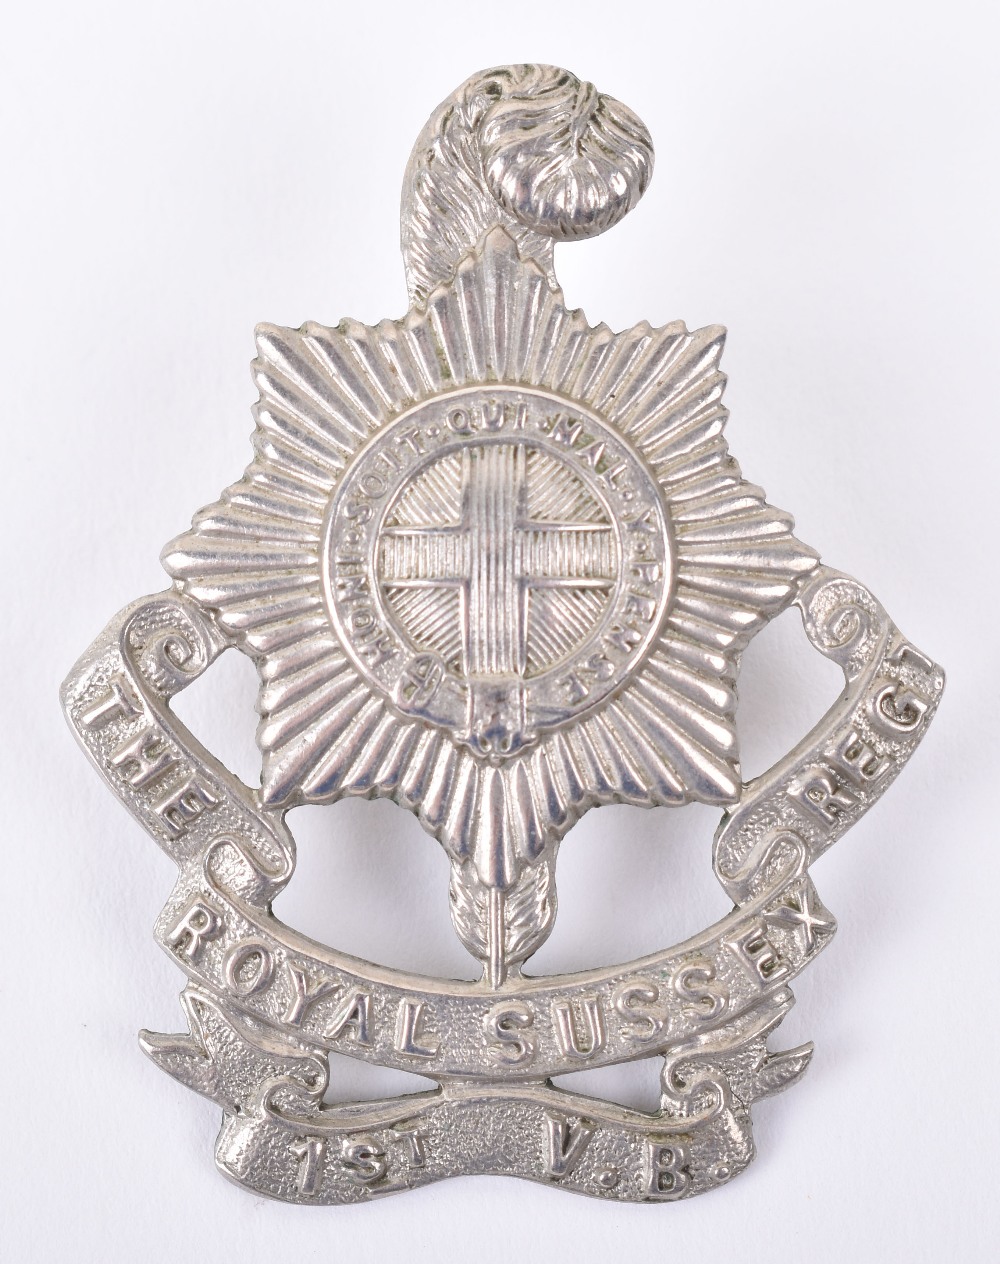 1st Volunteer Battalion Royal Sussex Regiment Cap Badge